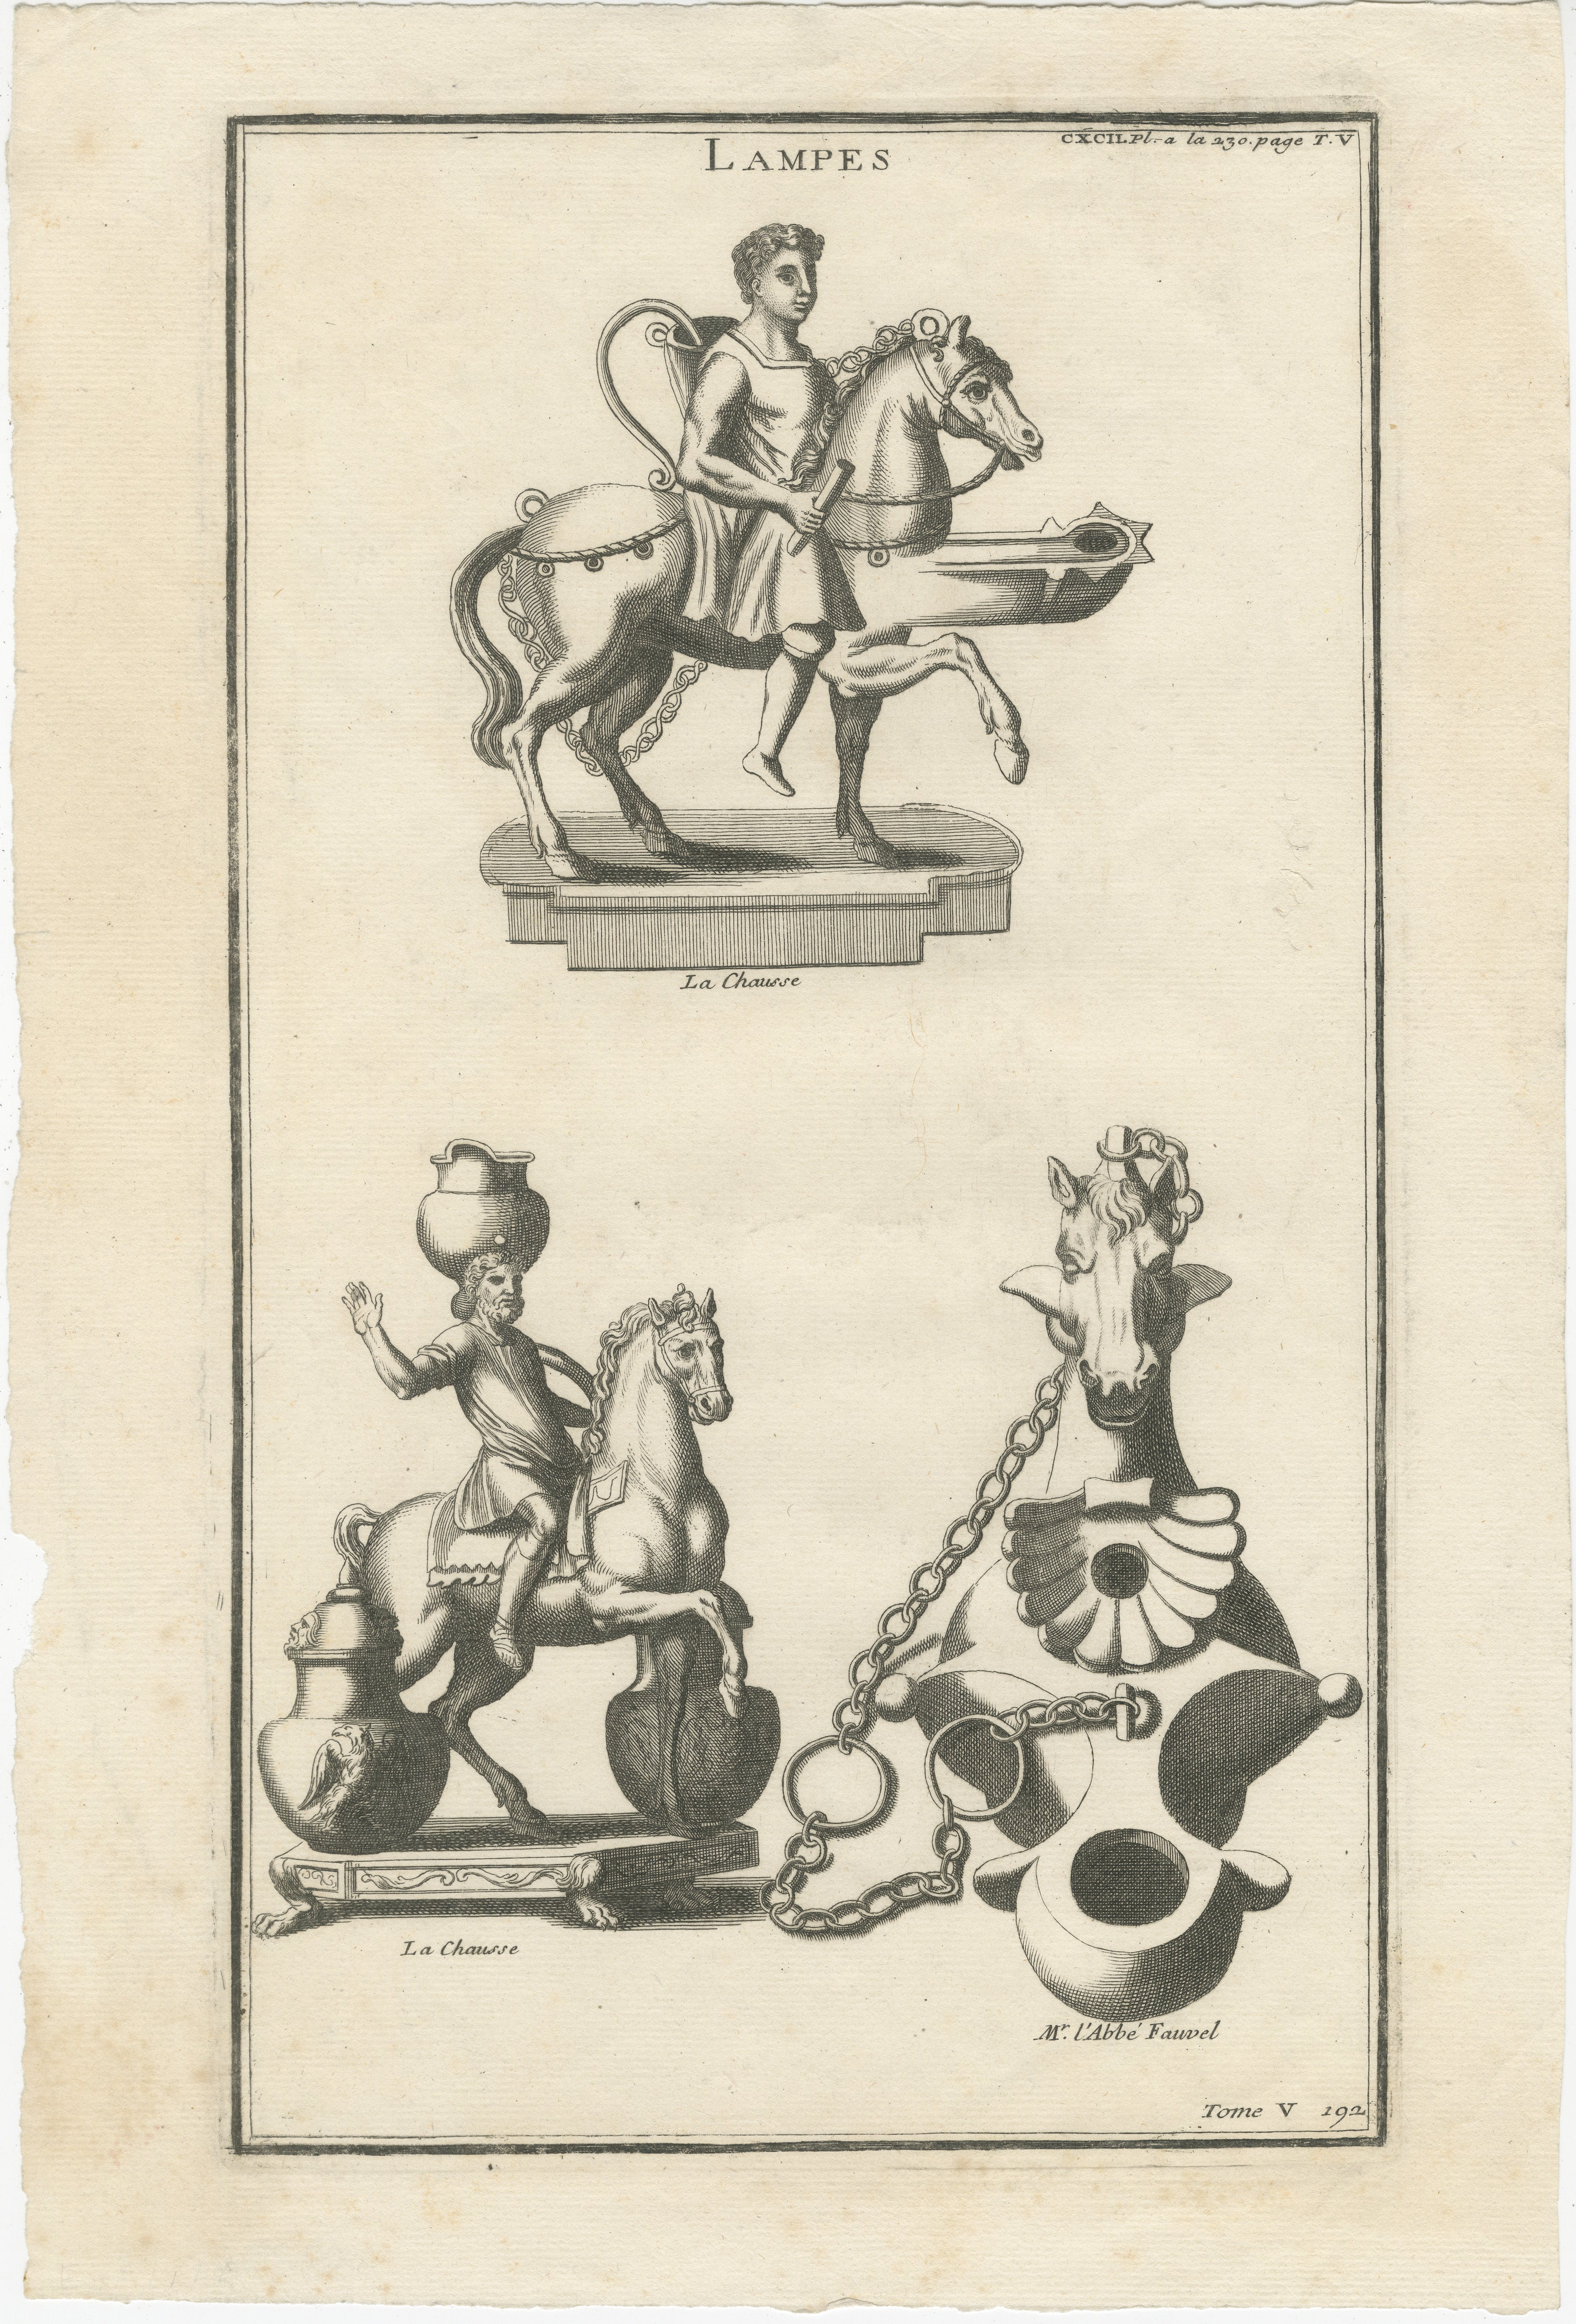 The image features an 18th-century engraving from Bernard de Montfaucon's 